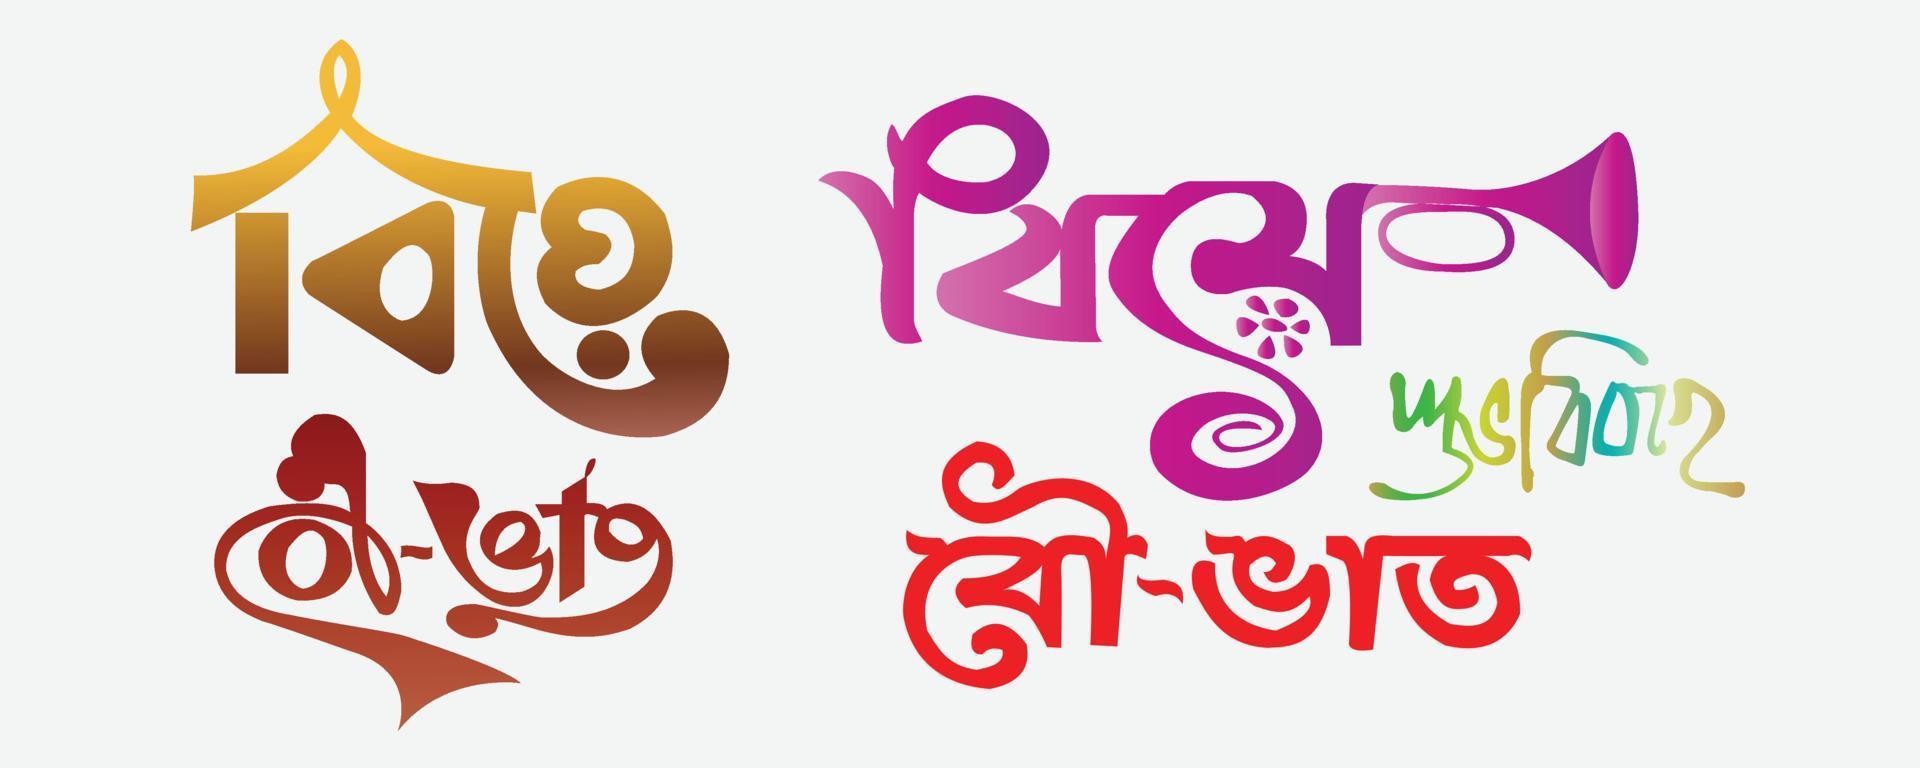 effet de texte de mariage bengali typographie shubho bibaho, typographie bengali - traduction de mariage de texte, conception de typhographie simple de mariage en marron vecteur